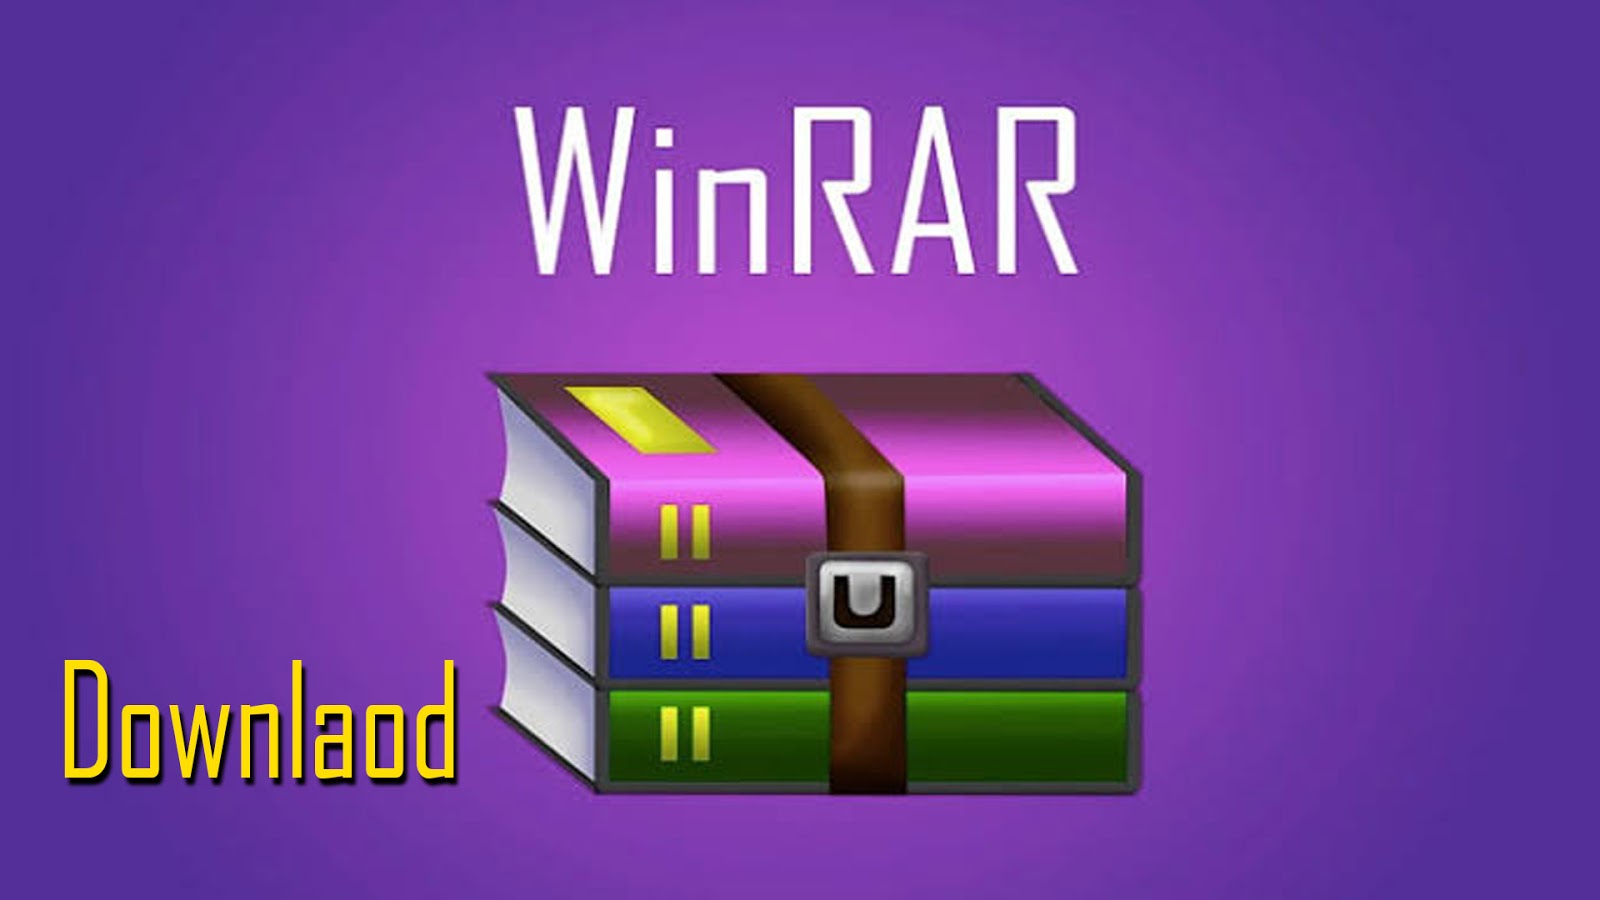 winrar-x64-500 free download